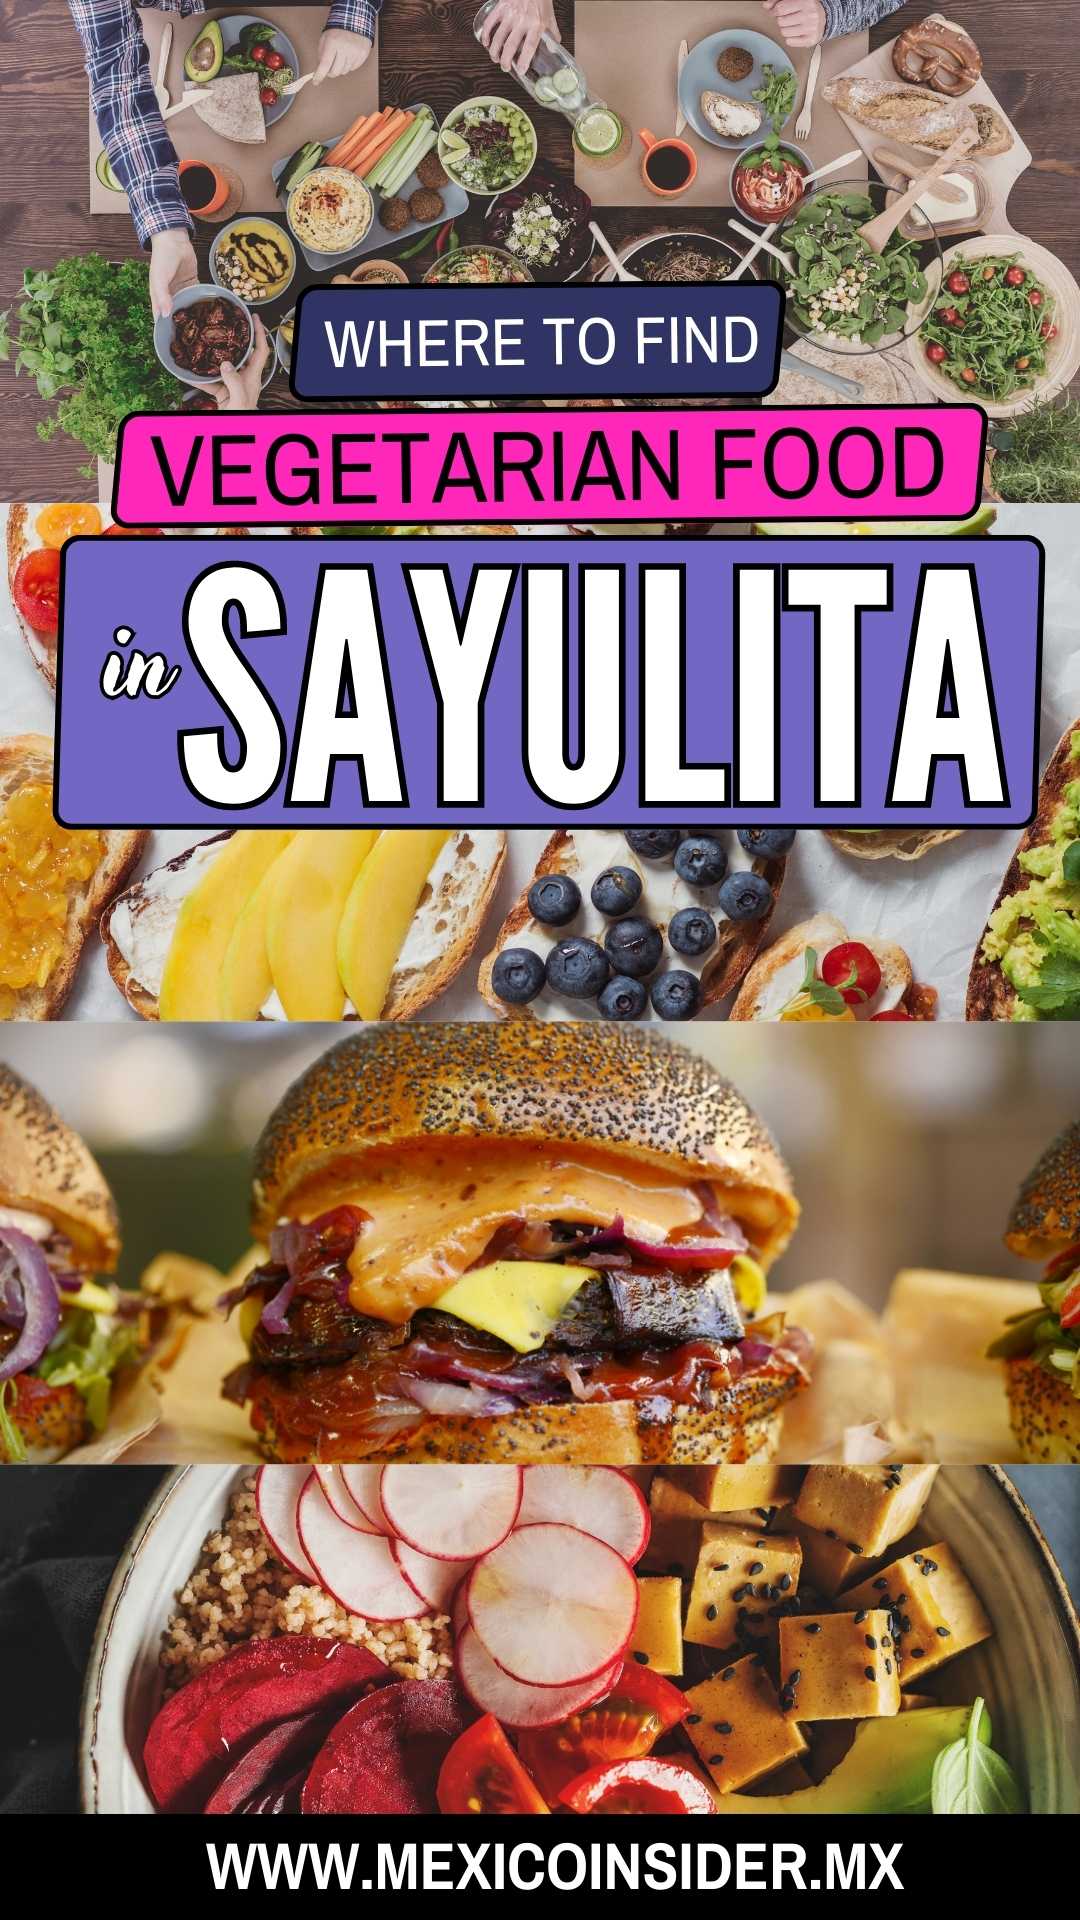 sayulita vegetarian restaurants